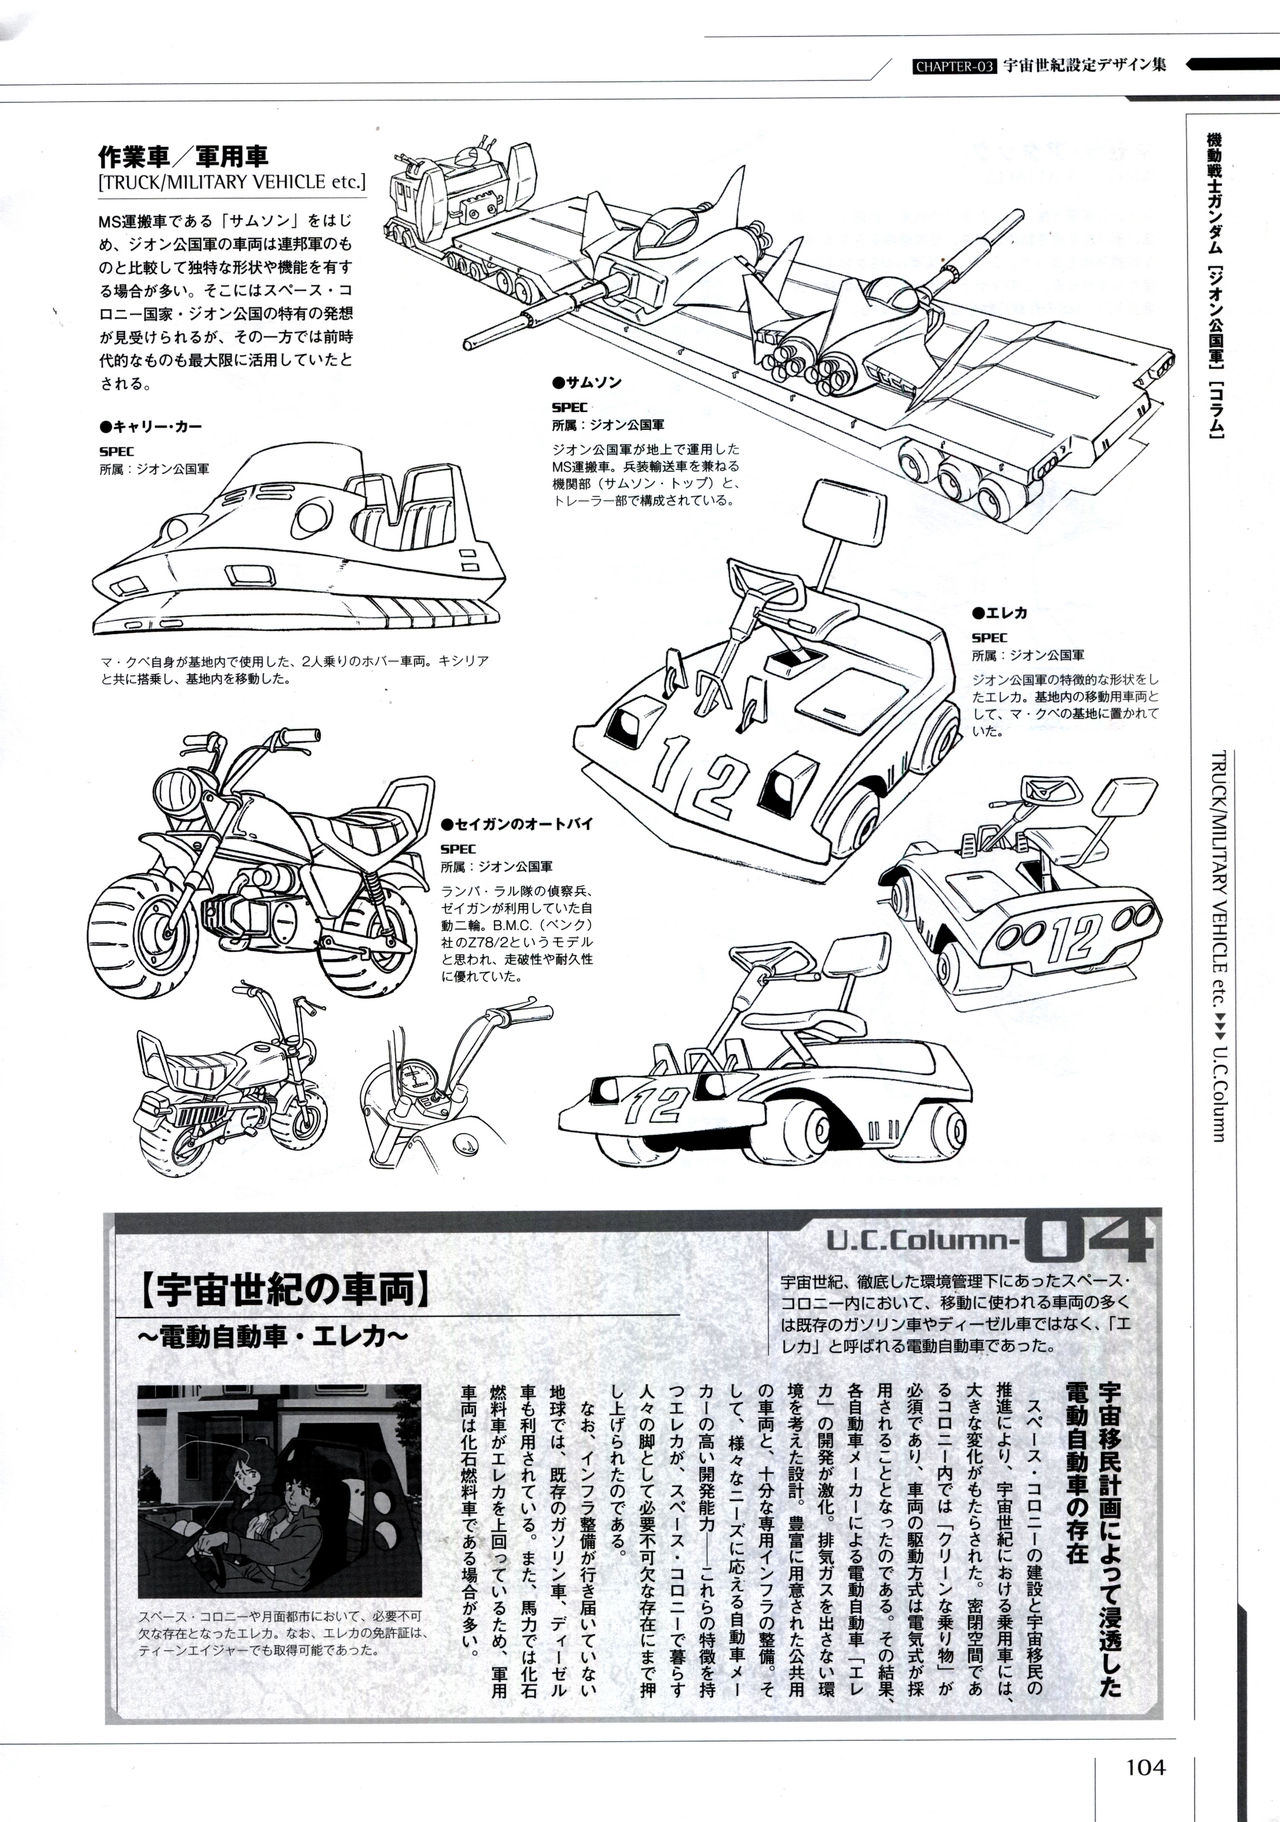 Mobile Suit Gundam - Ship & Aerospace Plane Encyclopedia - Revised Edition 109